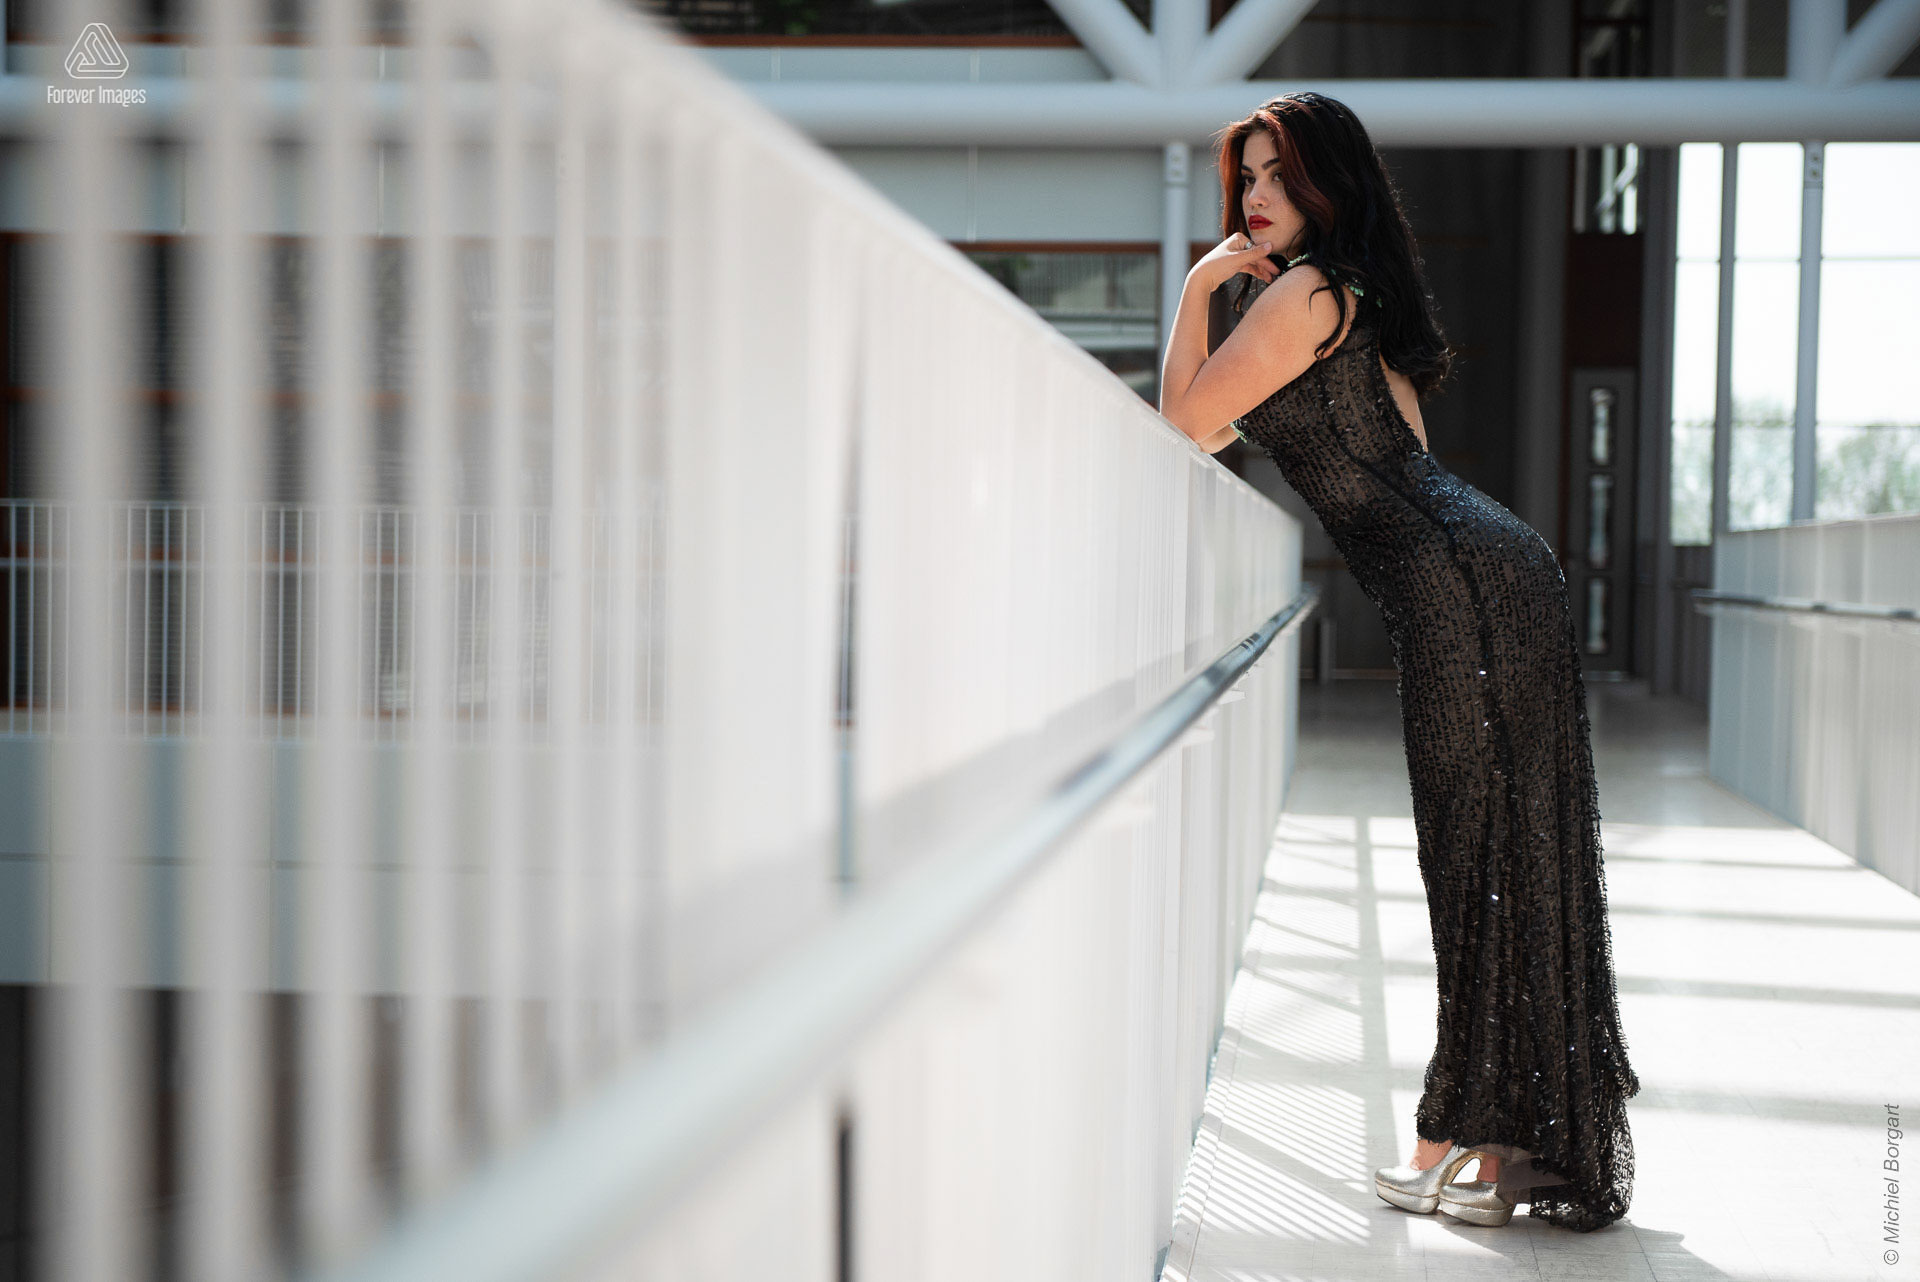 Fashion photo glamor lady leaning on railing black dress | Daphna Akkermans David Cardenas | Fashion Photographer Michiel Borgart - Forever Images.